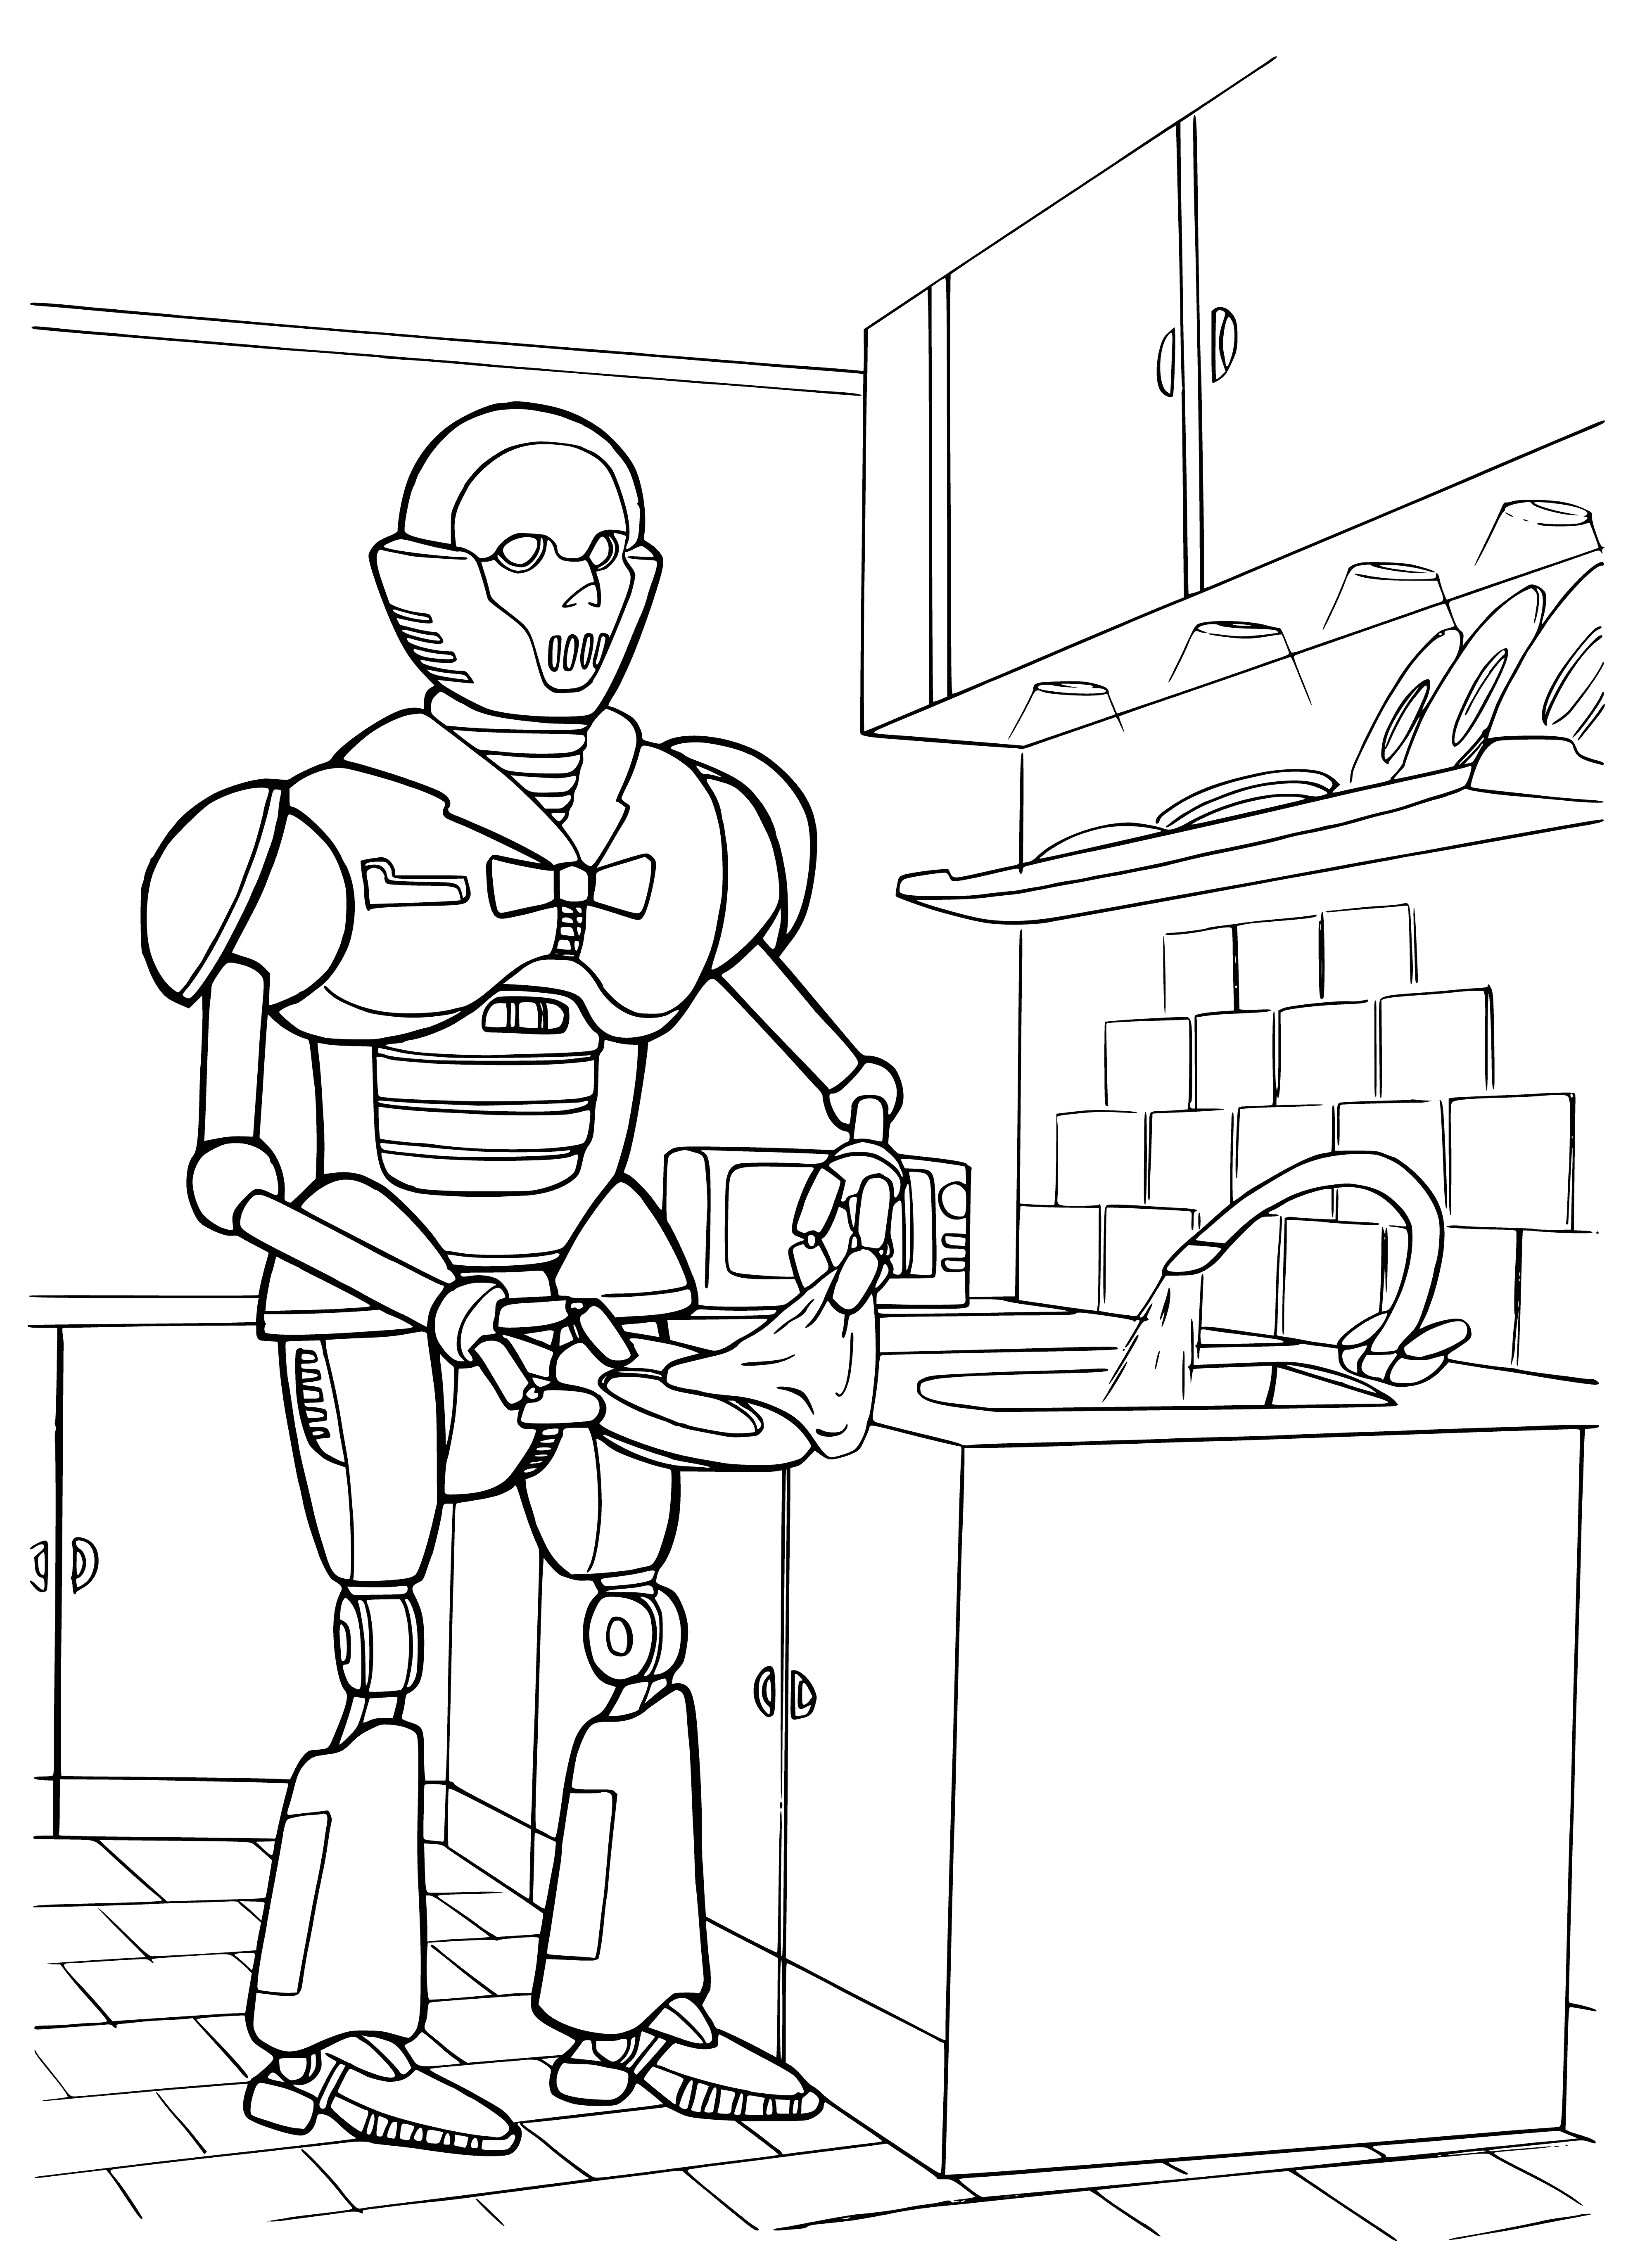 Robot dishwasher coloring page